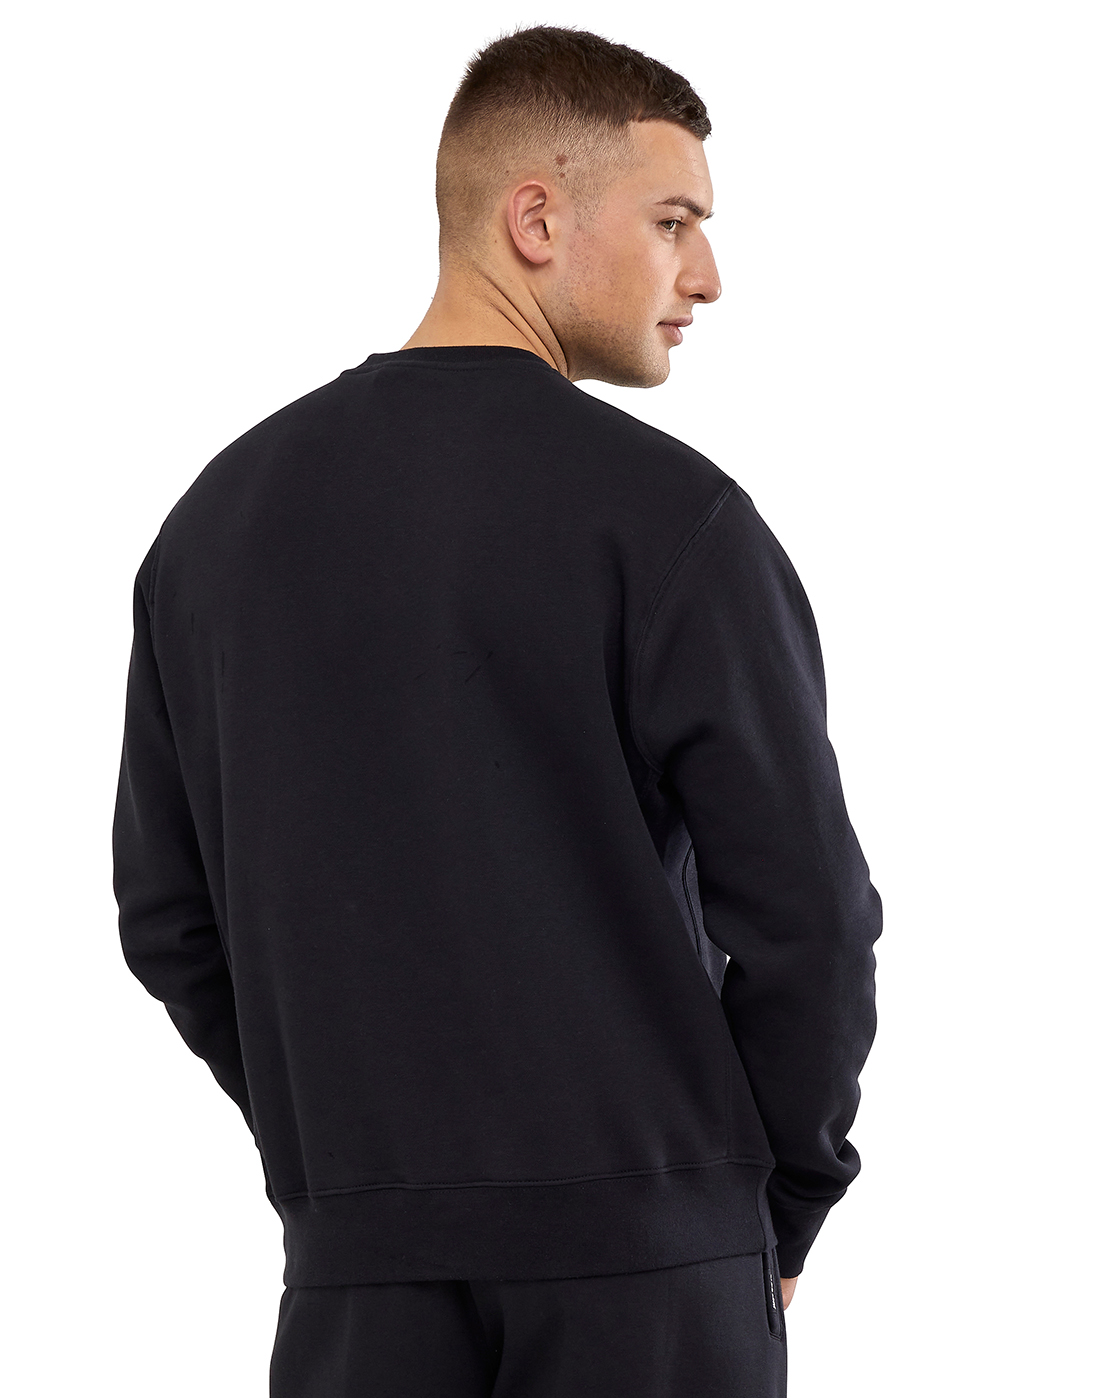 Nike Mens JDI Fleece Crew Neck Sweatshirt - Black | Life Style Sports UK